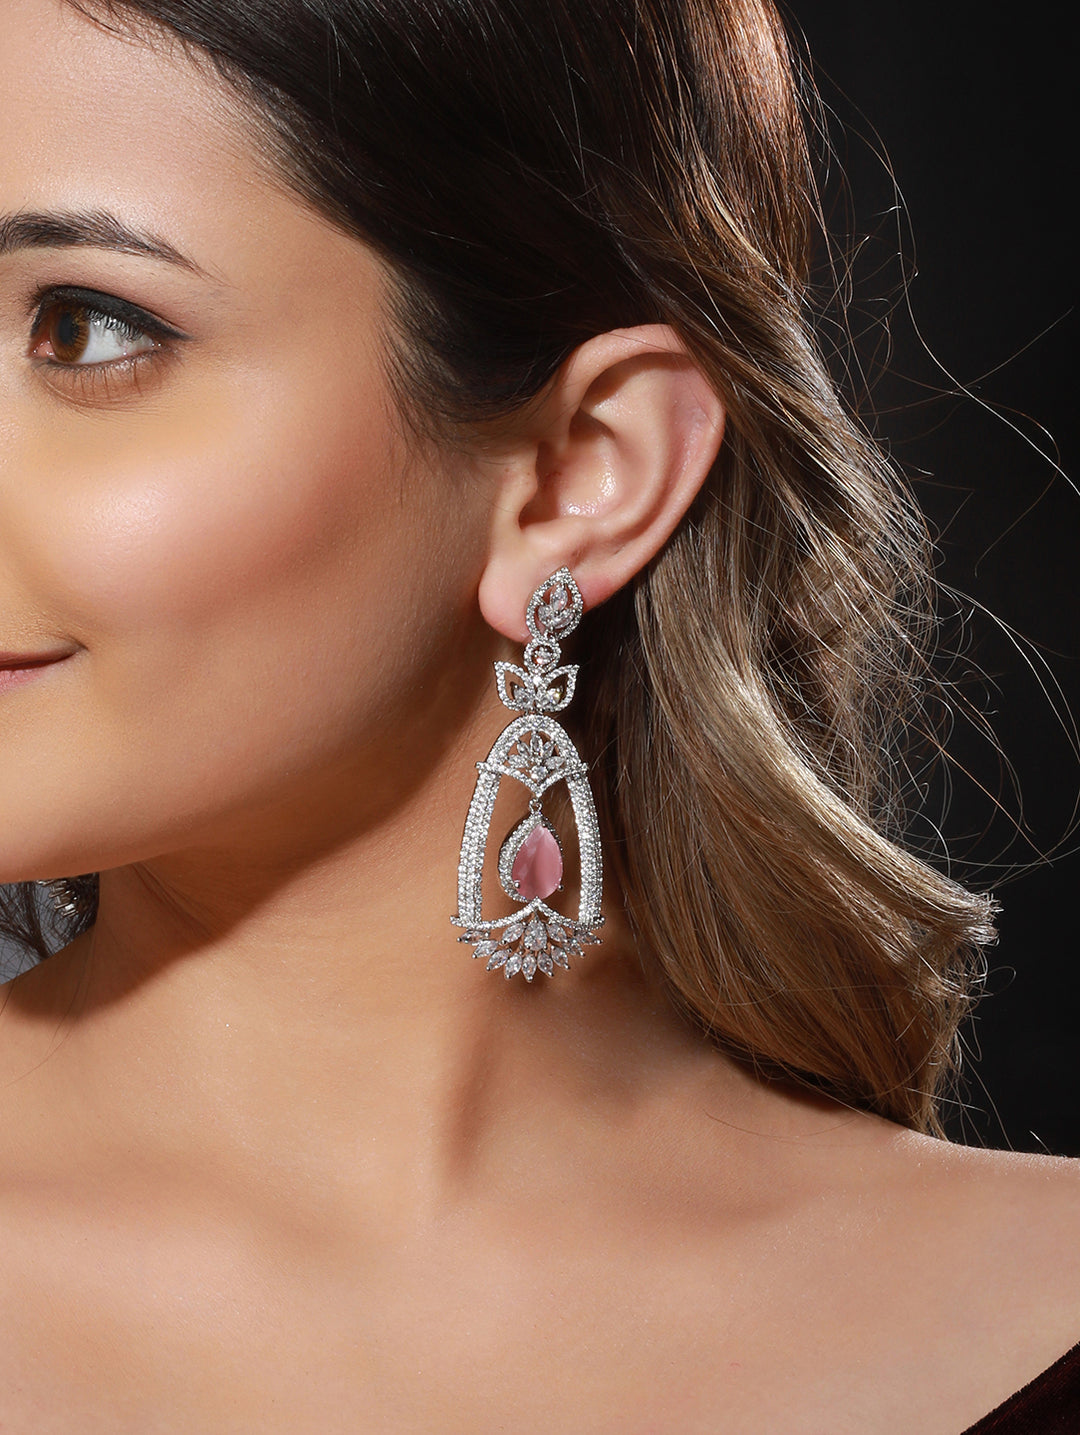 Pink Leaf American Diamond Silver-Plated Drop Earrings